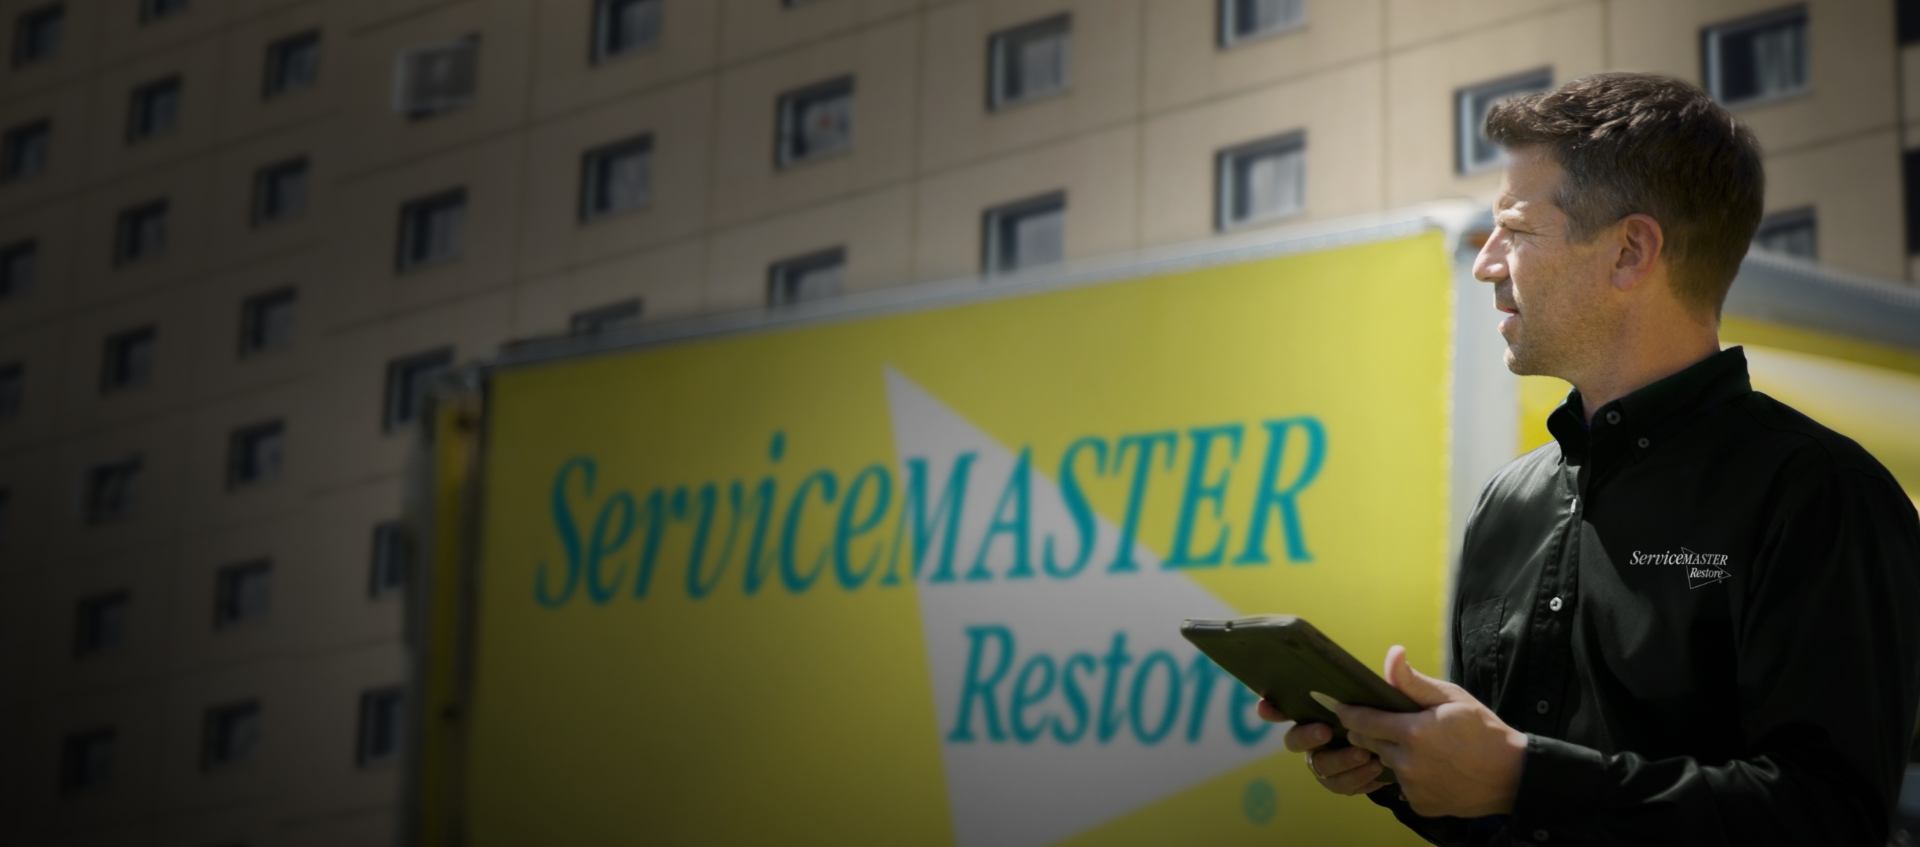 servicemaster restore employee